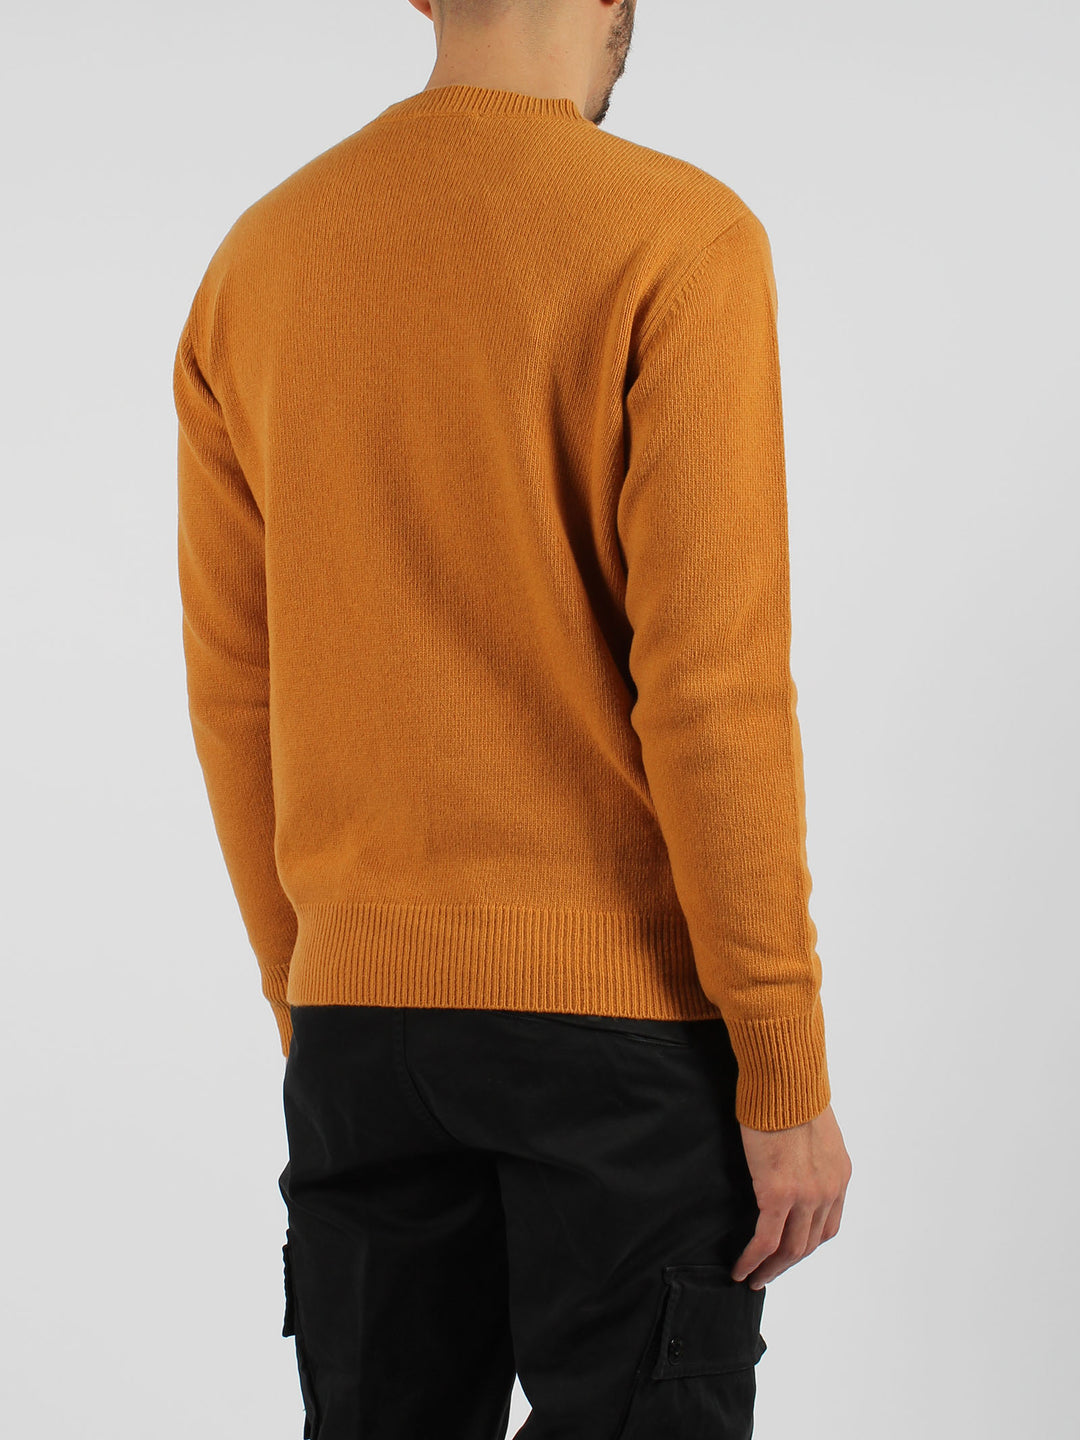 Wool crewneck sweater